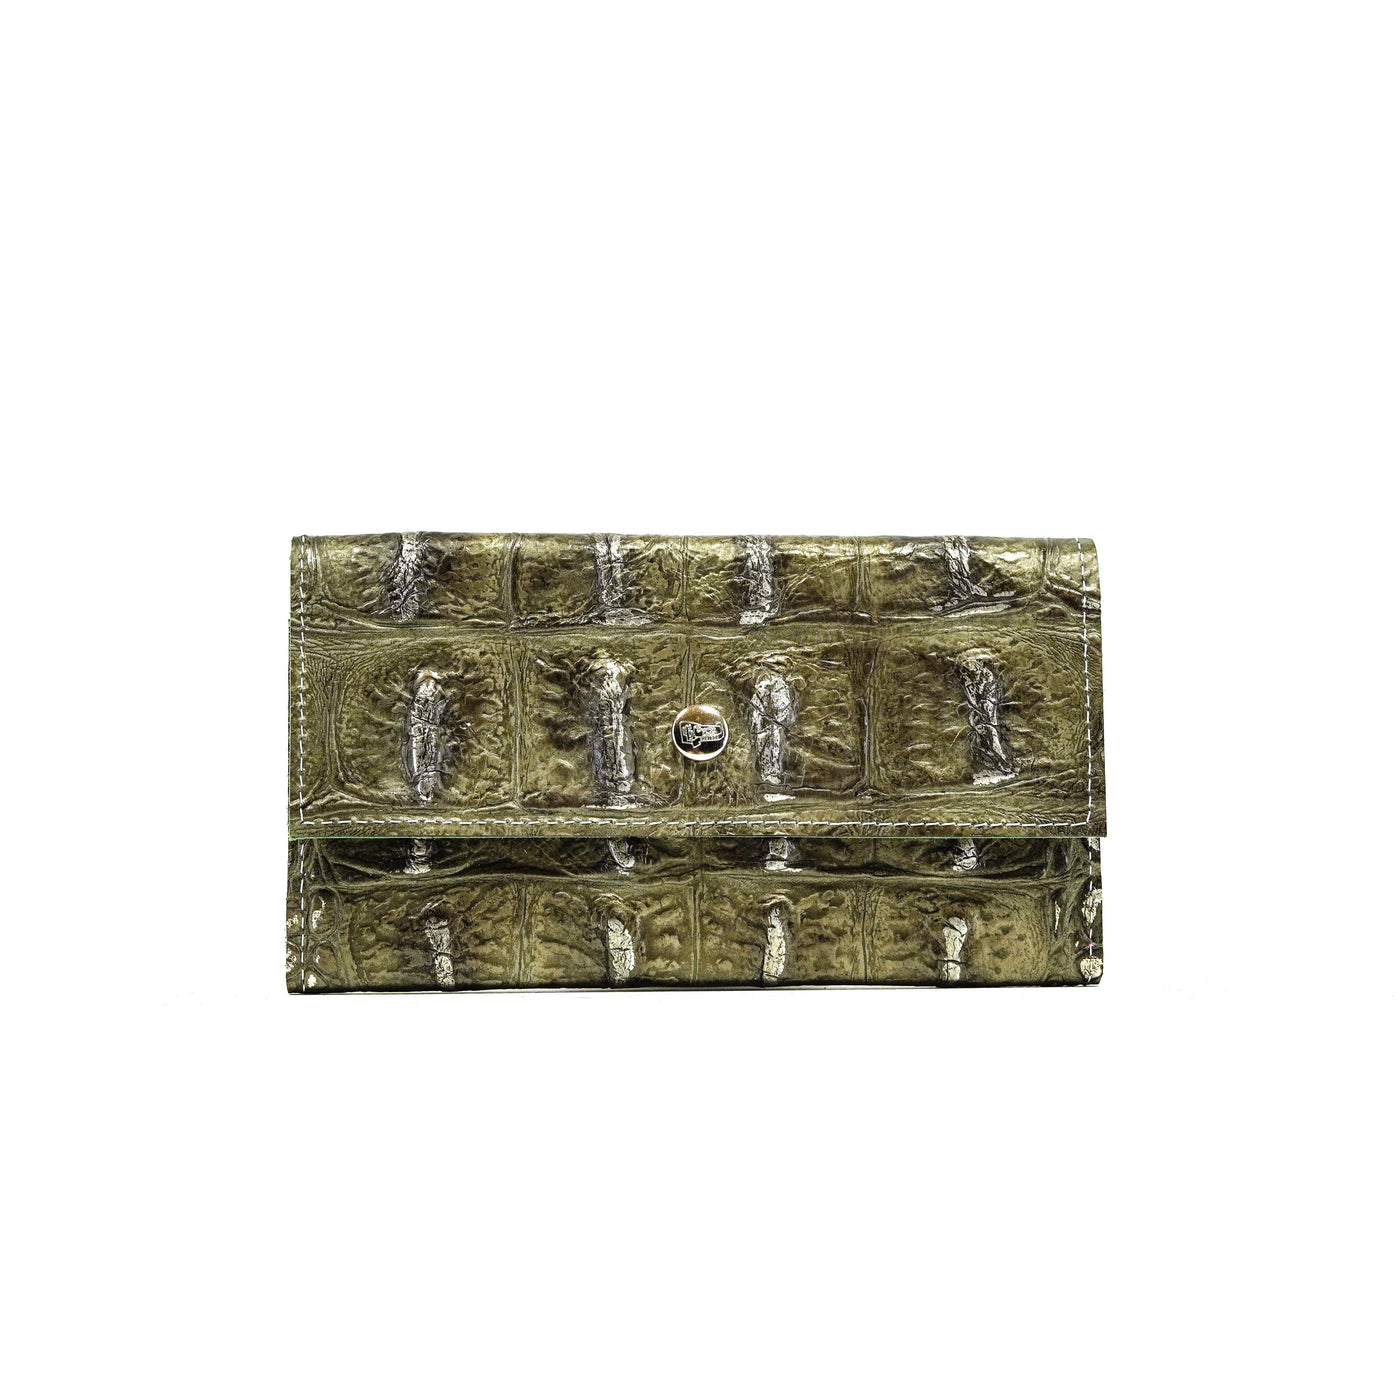 Kacey Wallet - All Embossed w/ Antique Jumbo Croc-Kacey Wallet-Western-Cowhide-Bags-Handmade-Products-Gifts-Dancing Cactus Designs